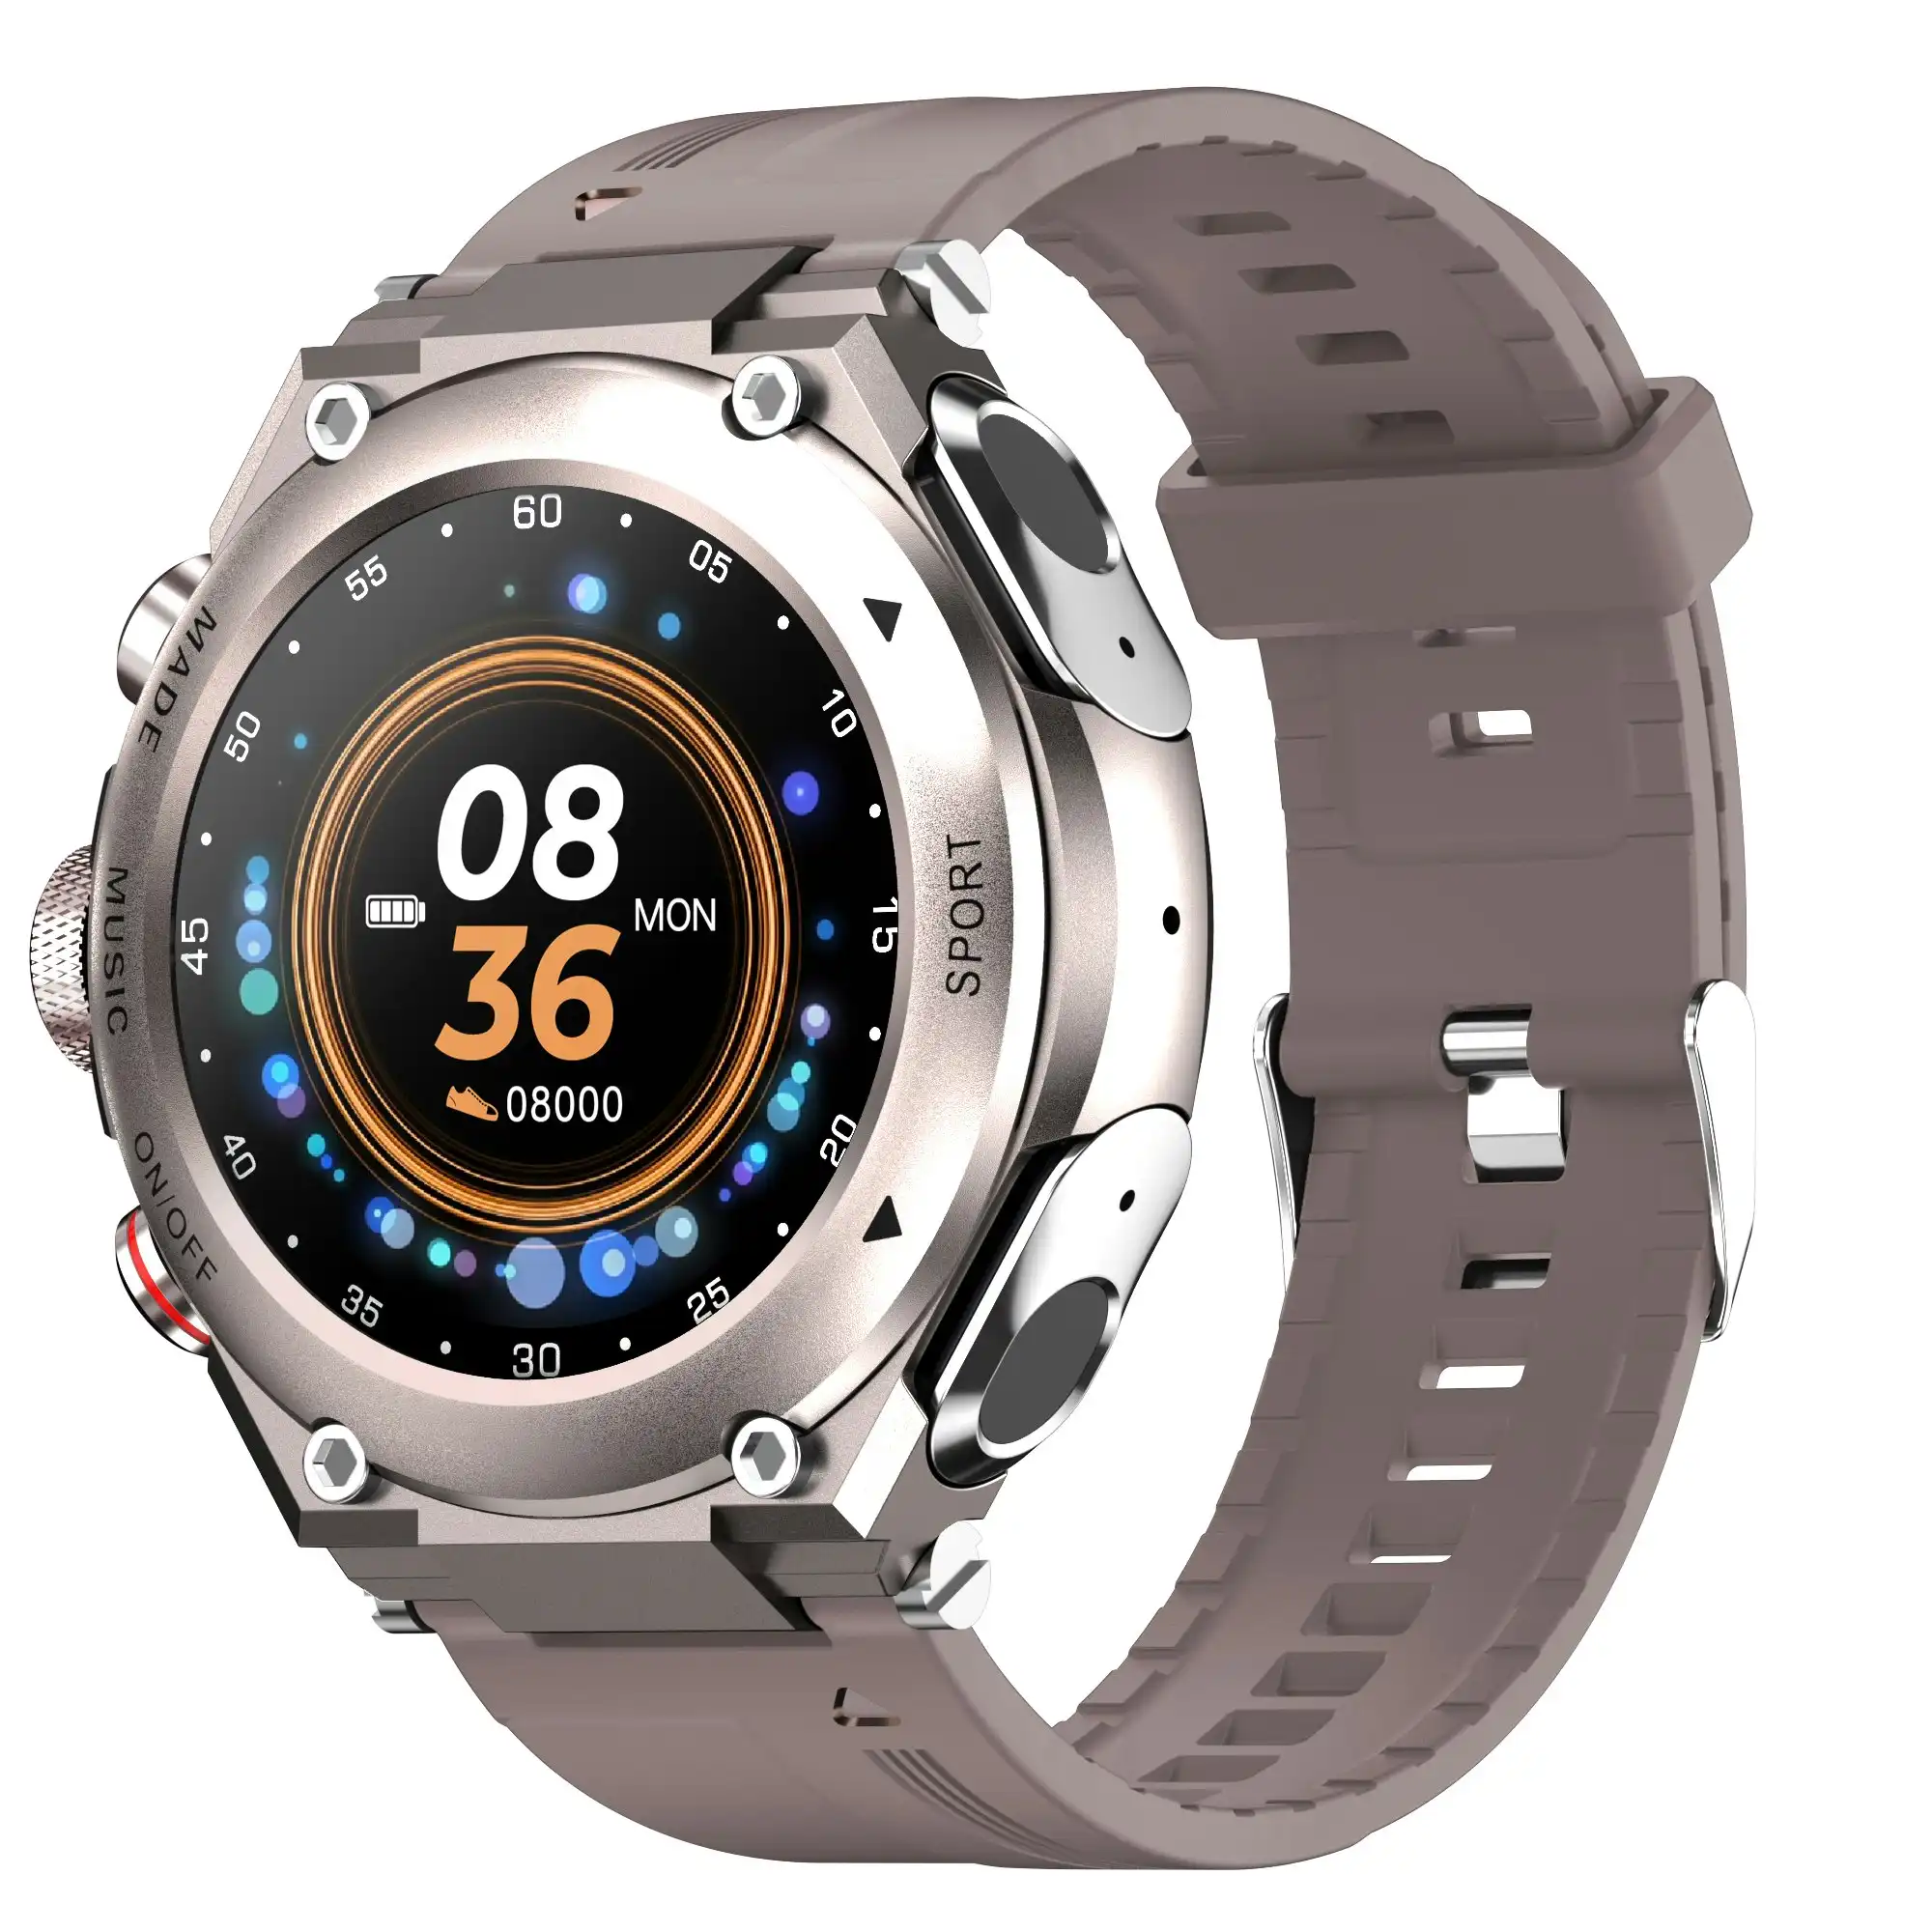 2 in 1 Bluetooth Smart Watch TWS Wireless Earphones 1.28" 9D Touch Screen BT 5.0 - Gun Brown